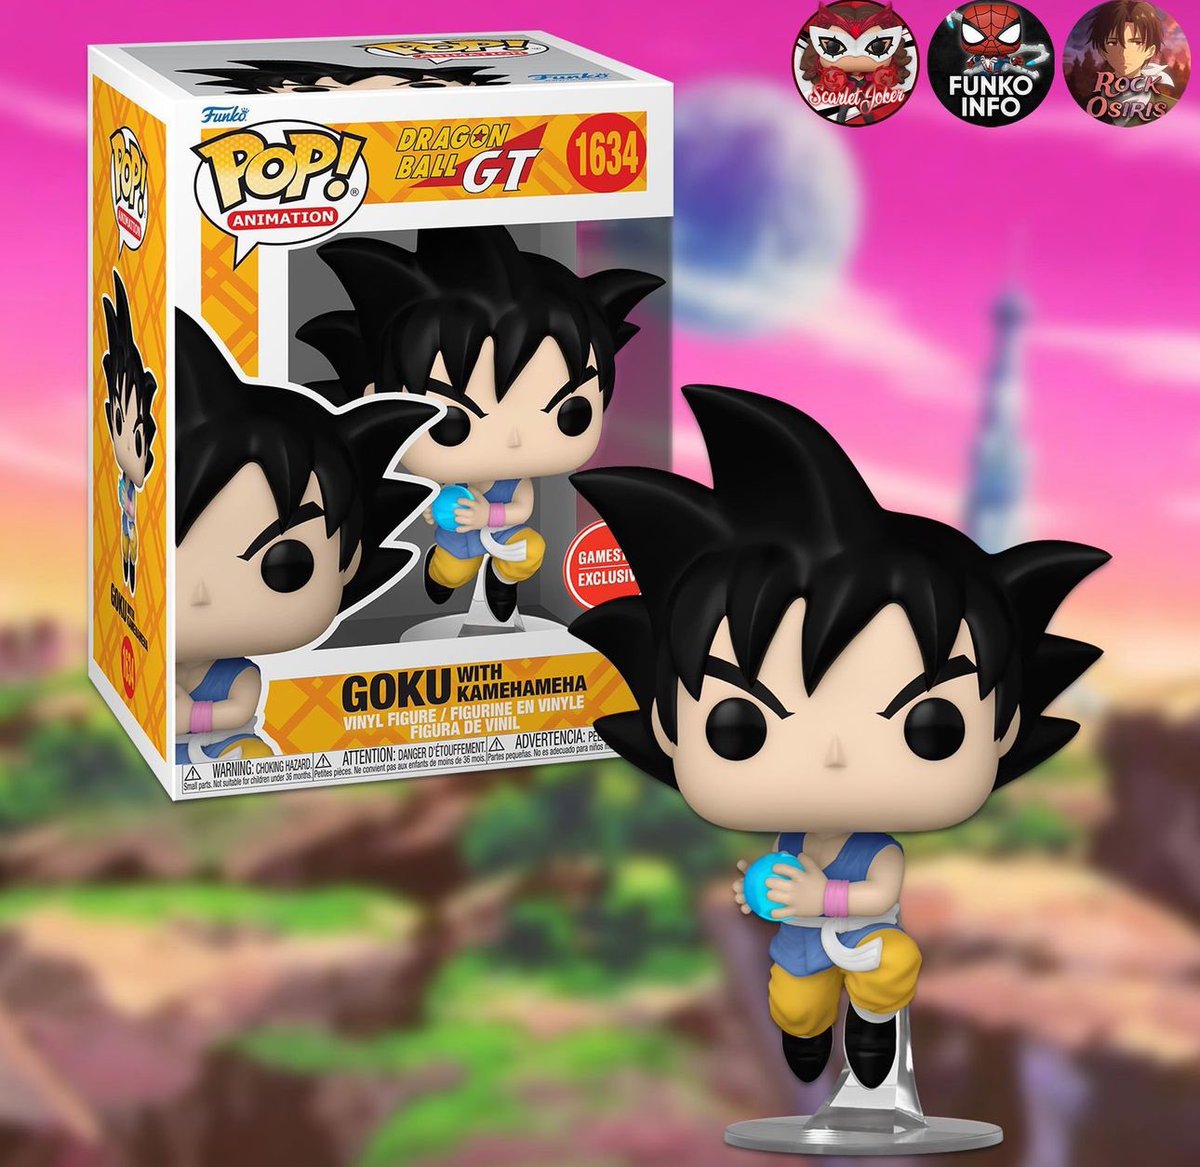 First look! Goku with Kamehameha from Dragon Ball GT! Stay tuned for links tomorrow ~ thanks @funkoinfo_ ~ #DBGT #DragonBallGT #FPN #FunkoPOPNews #Funko #POP #POPVinyl #FunkoPOP #FunkoSoda